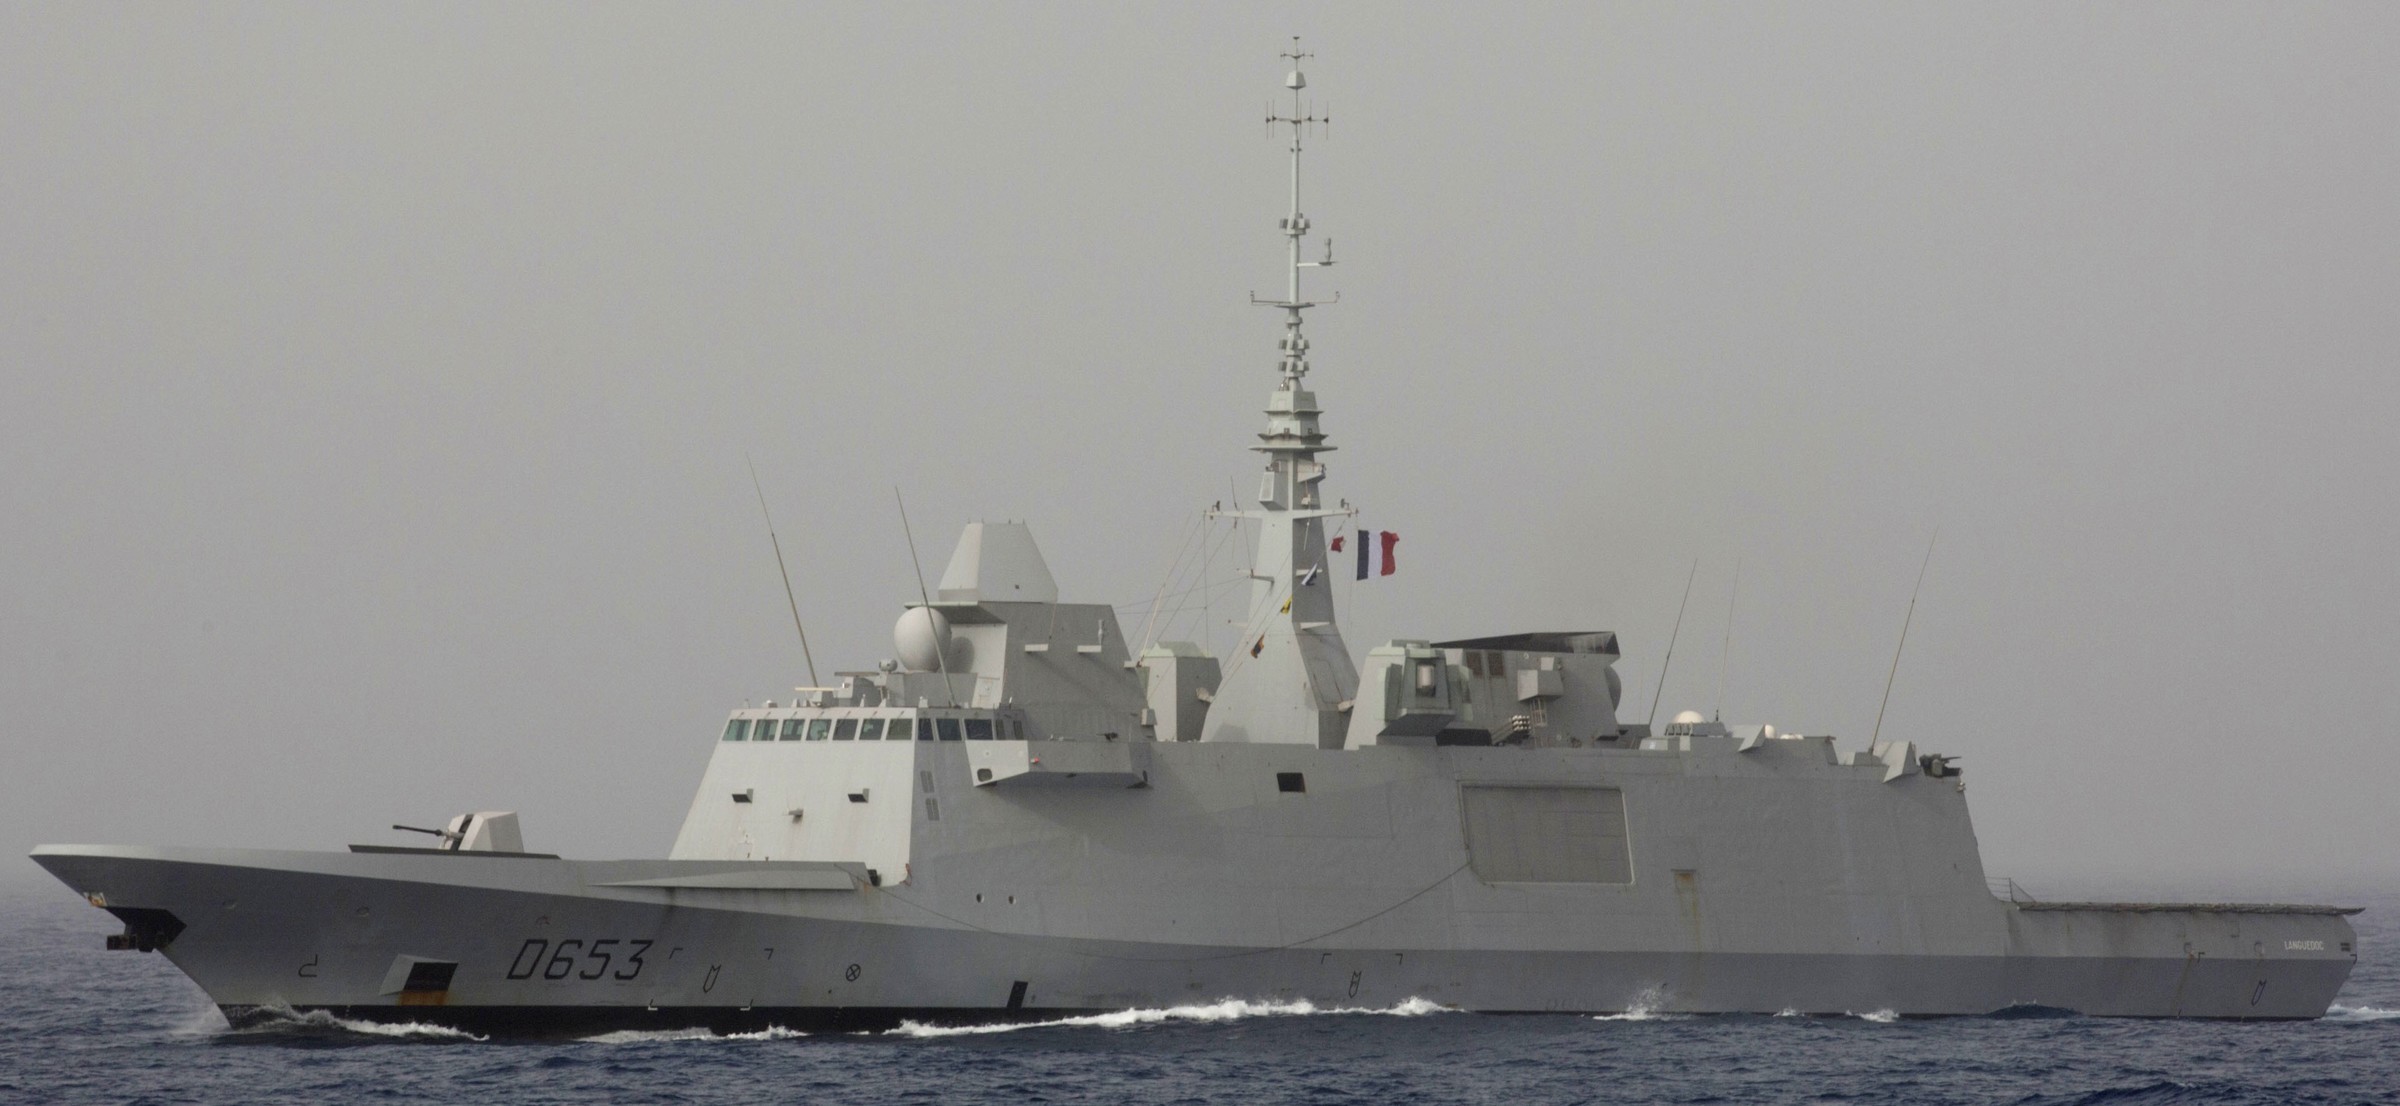 d-653 fs languedoc fremm aquitaine class frigate fregate multi purpose french navy marine nationale 11